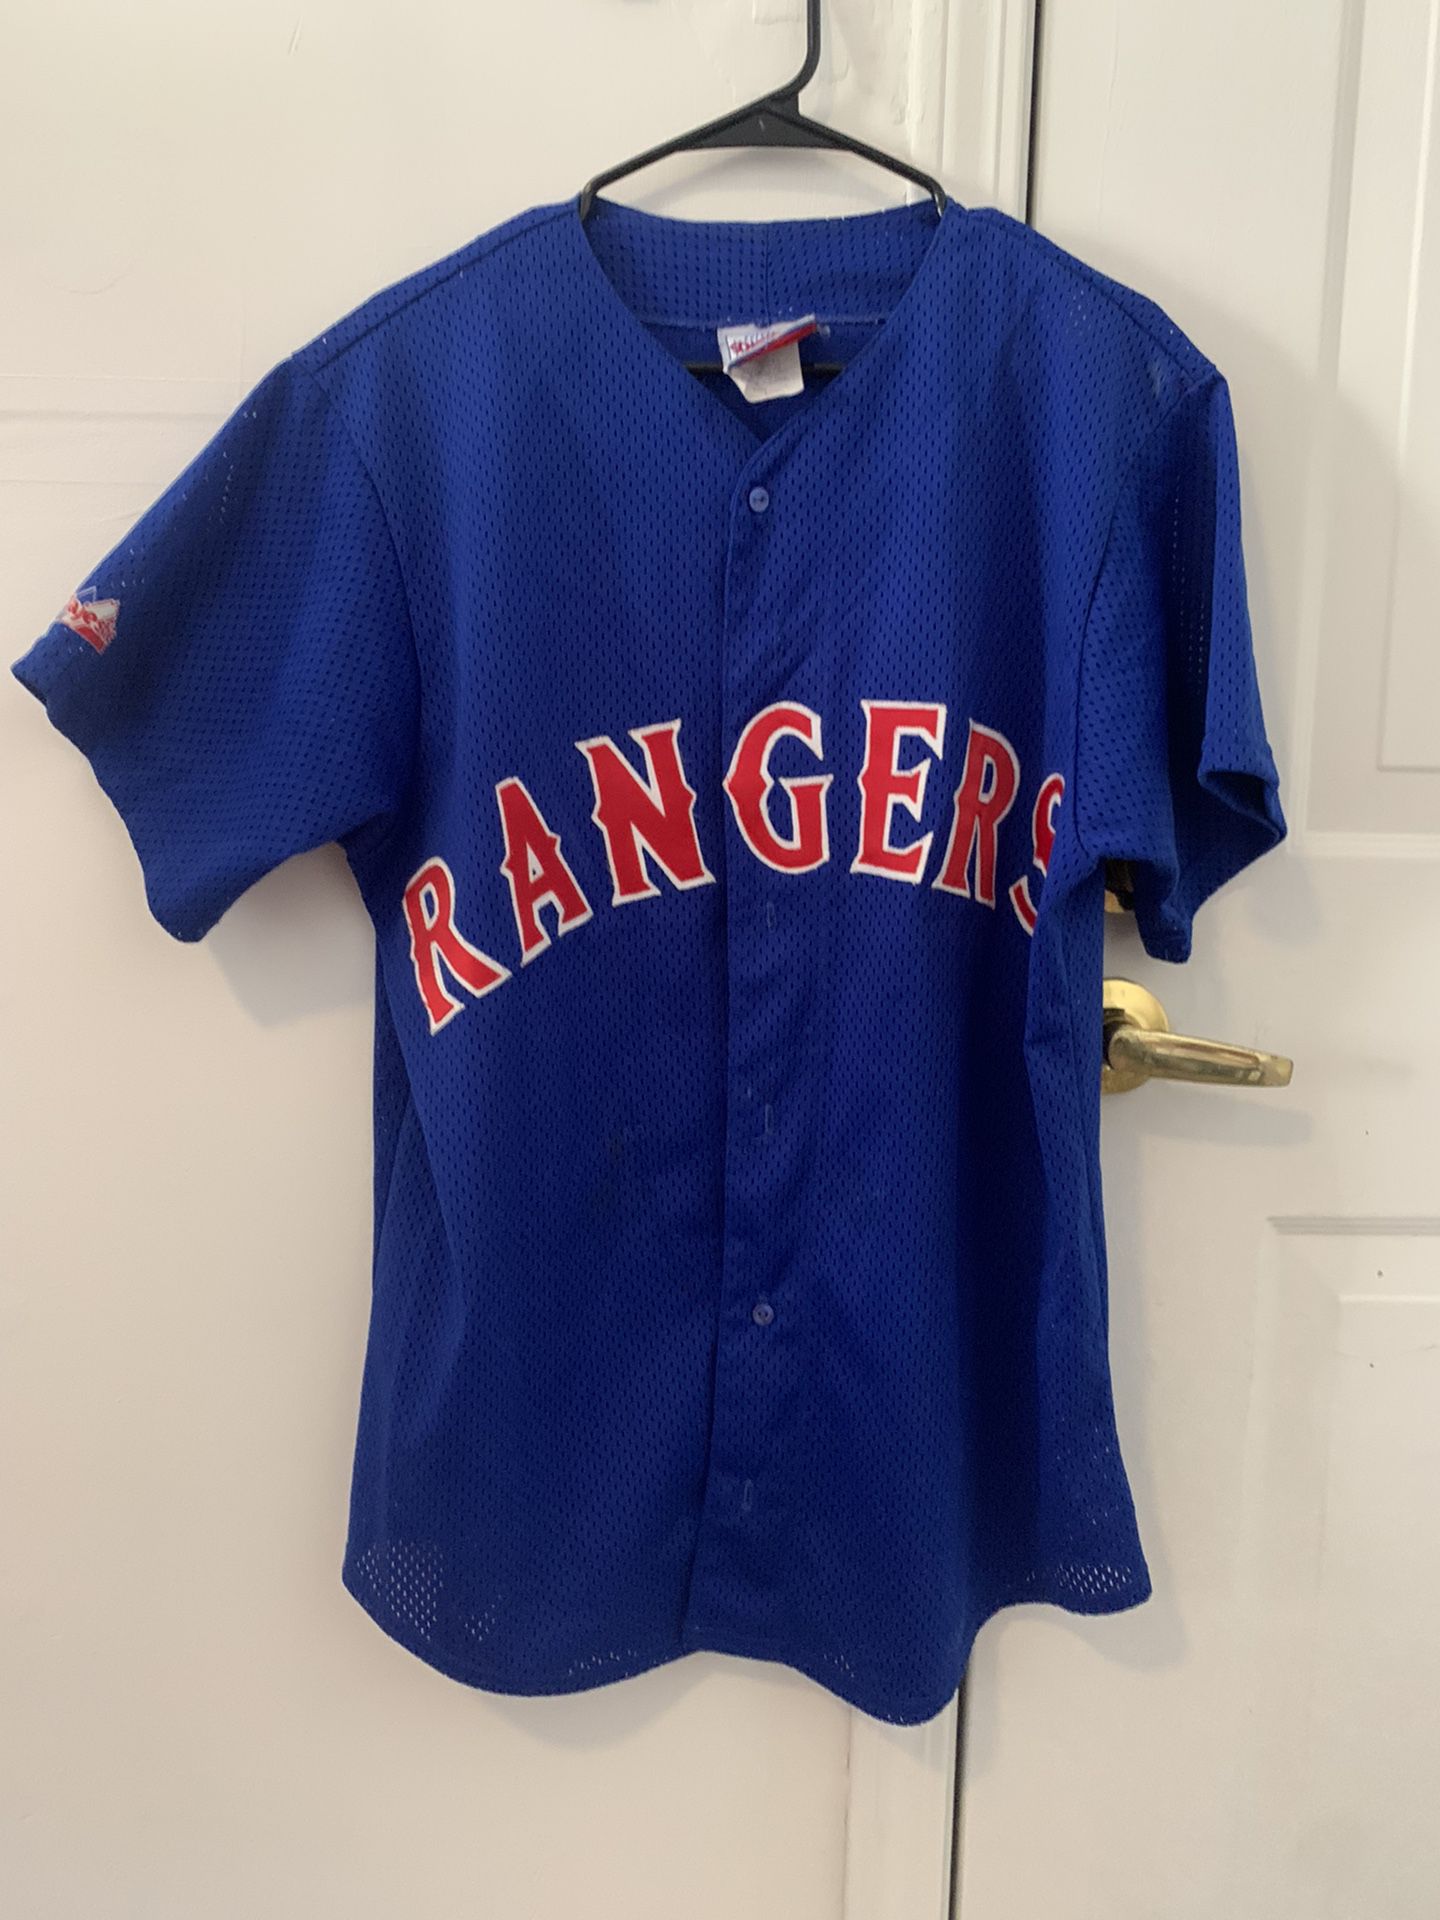 Rangers Baseball Shirt